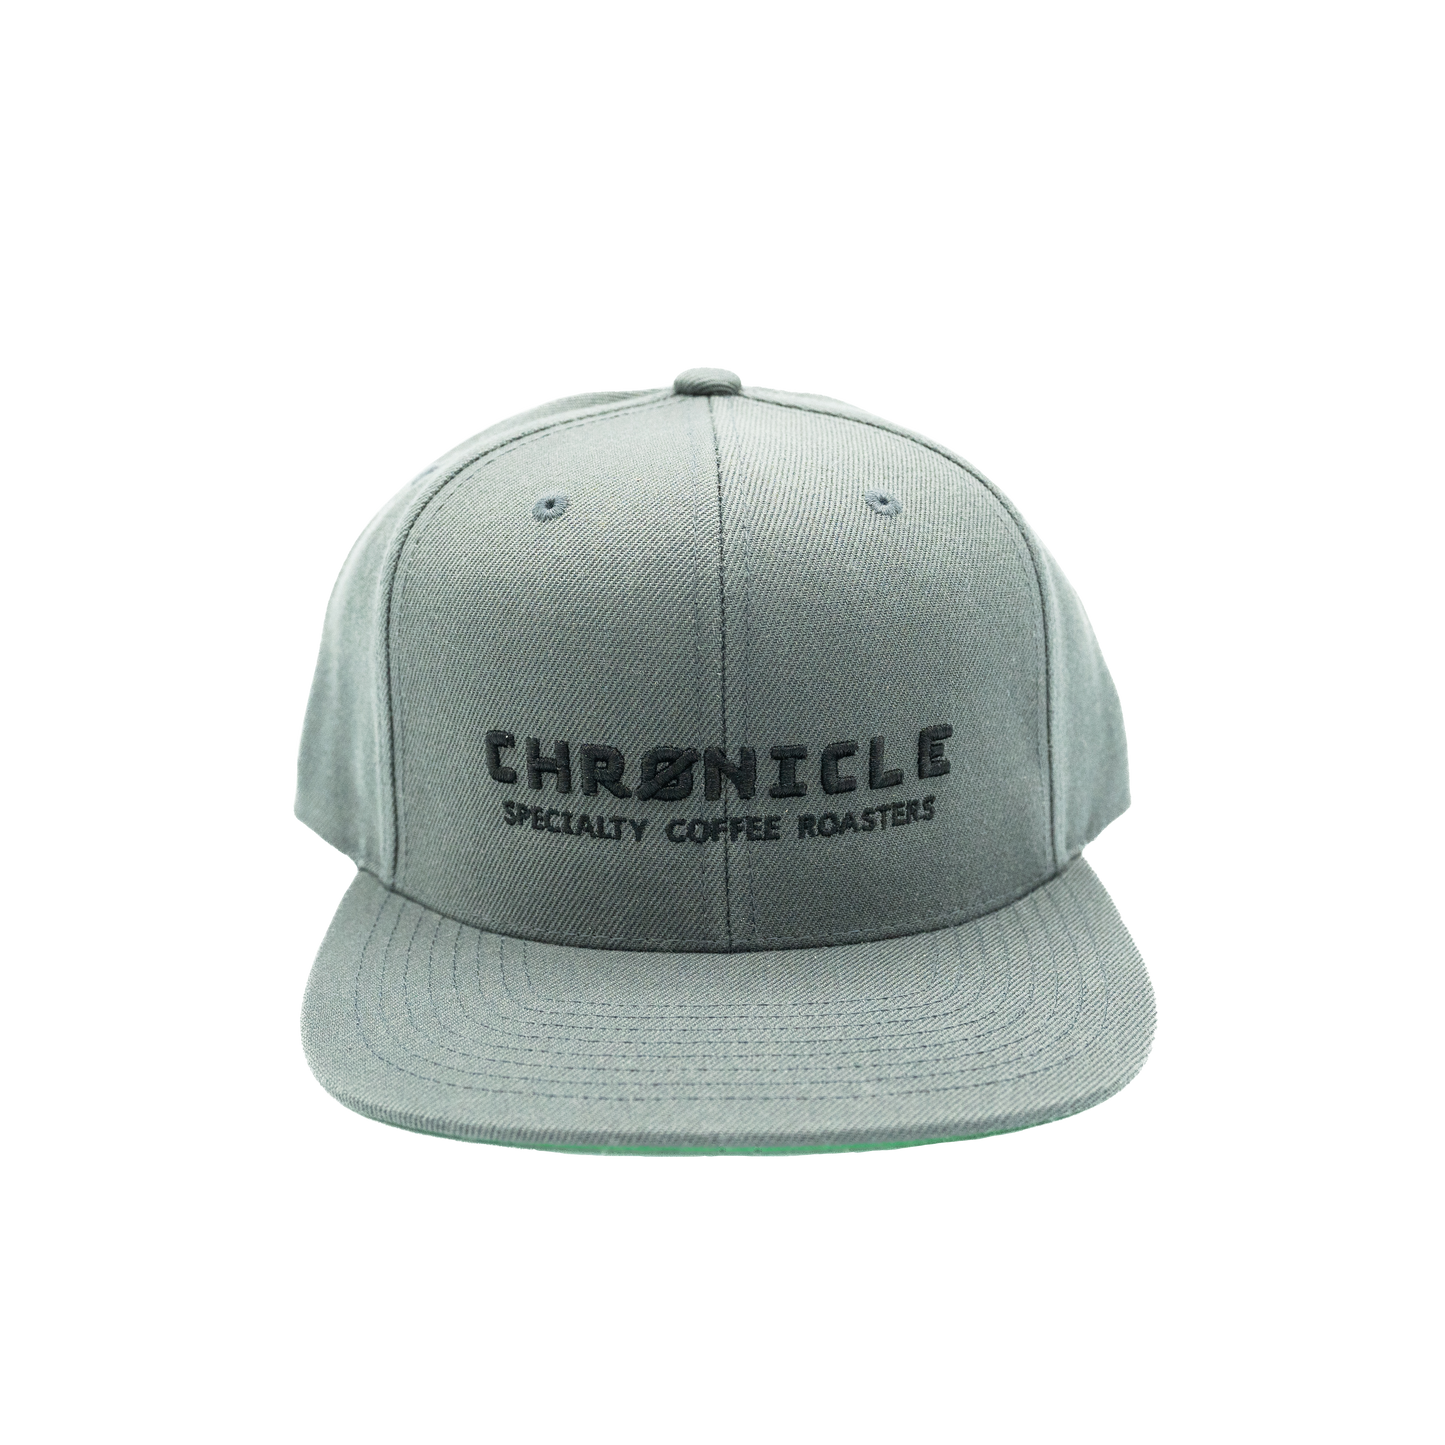 Chronicle Flat Cap